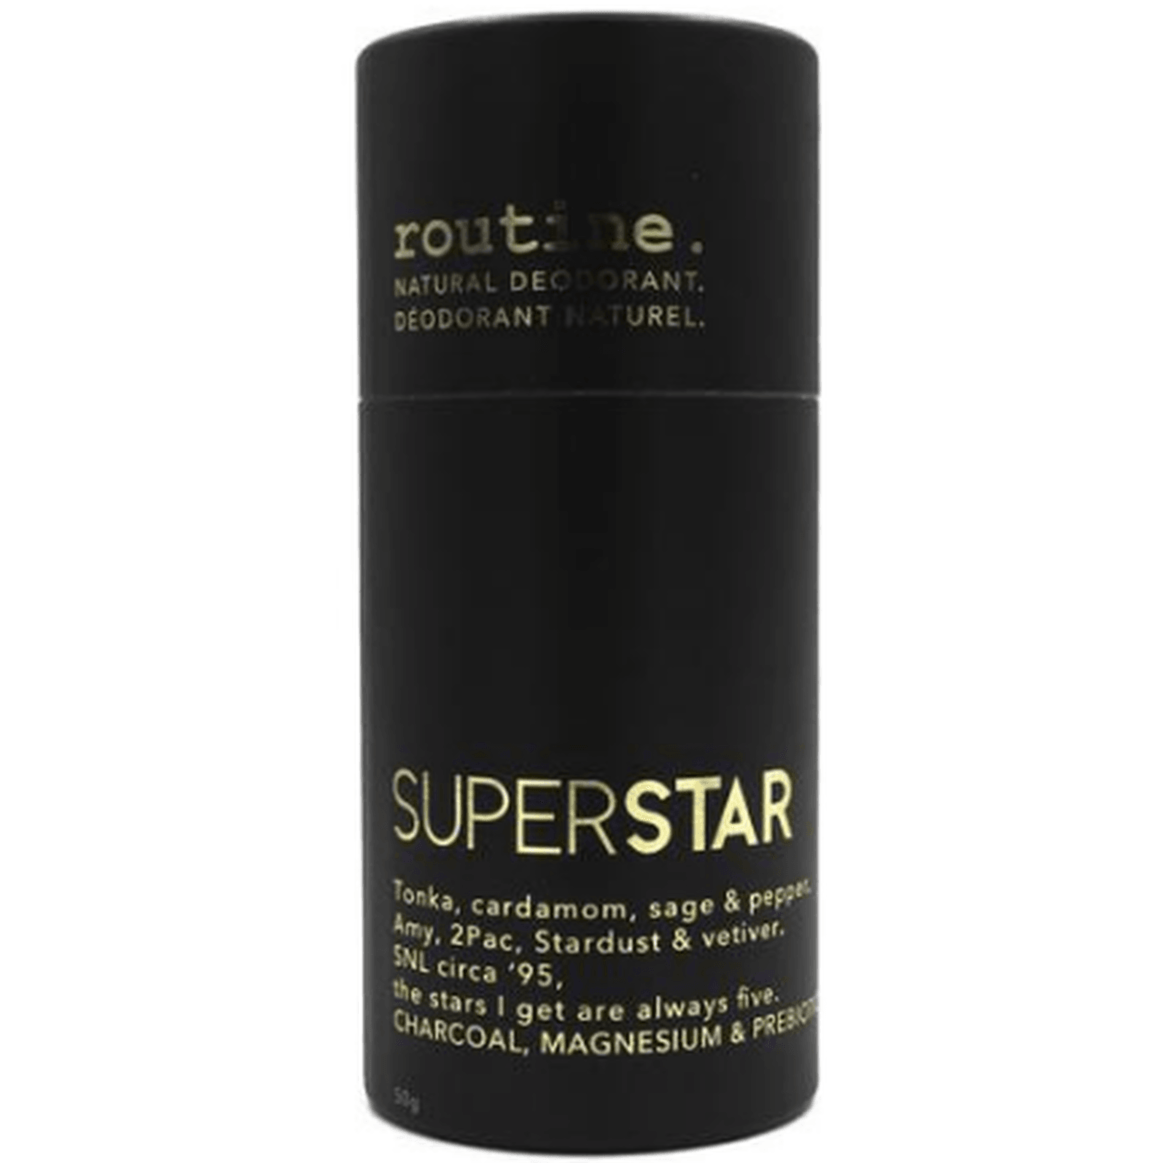 Routine Natural Deodorant Stick Superstar 50 grams Deodorant at Village Vitamin Store